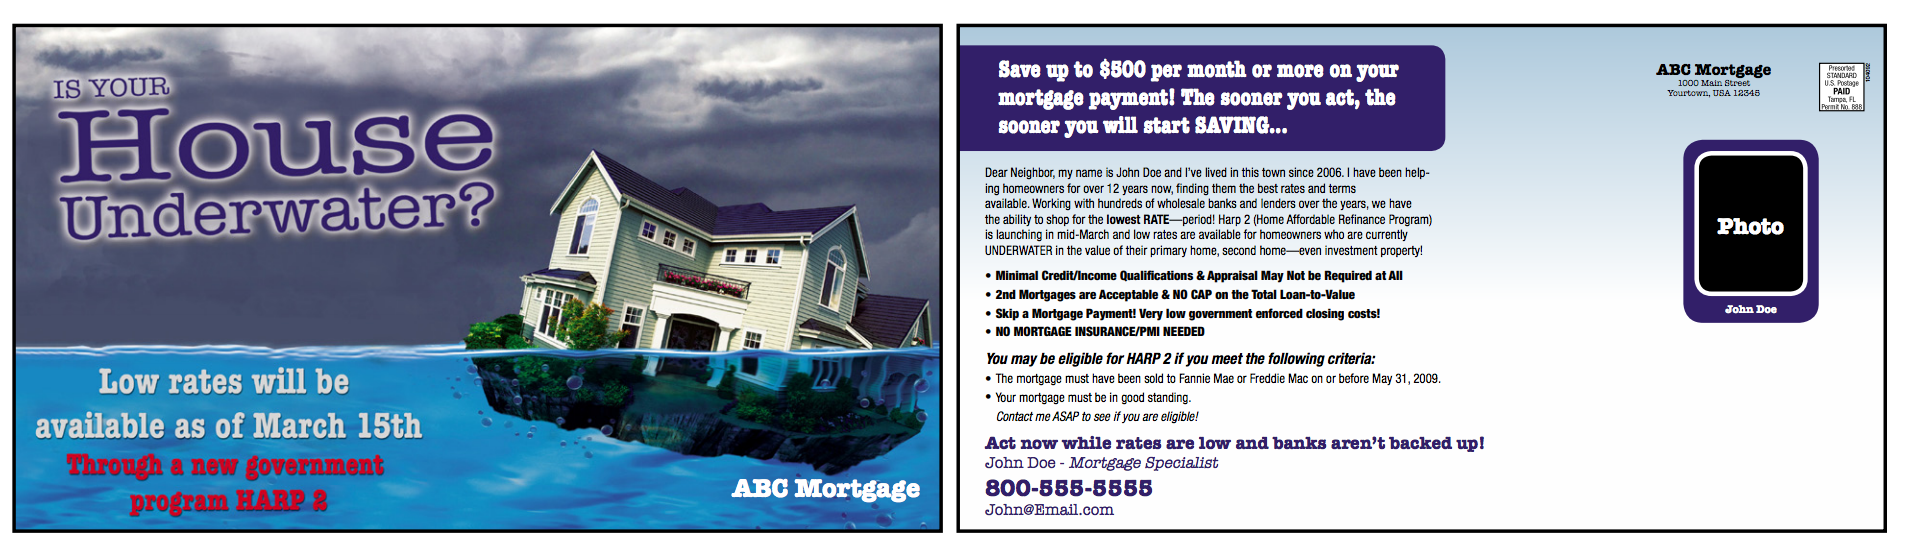 mortgage broker postcard ideas